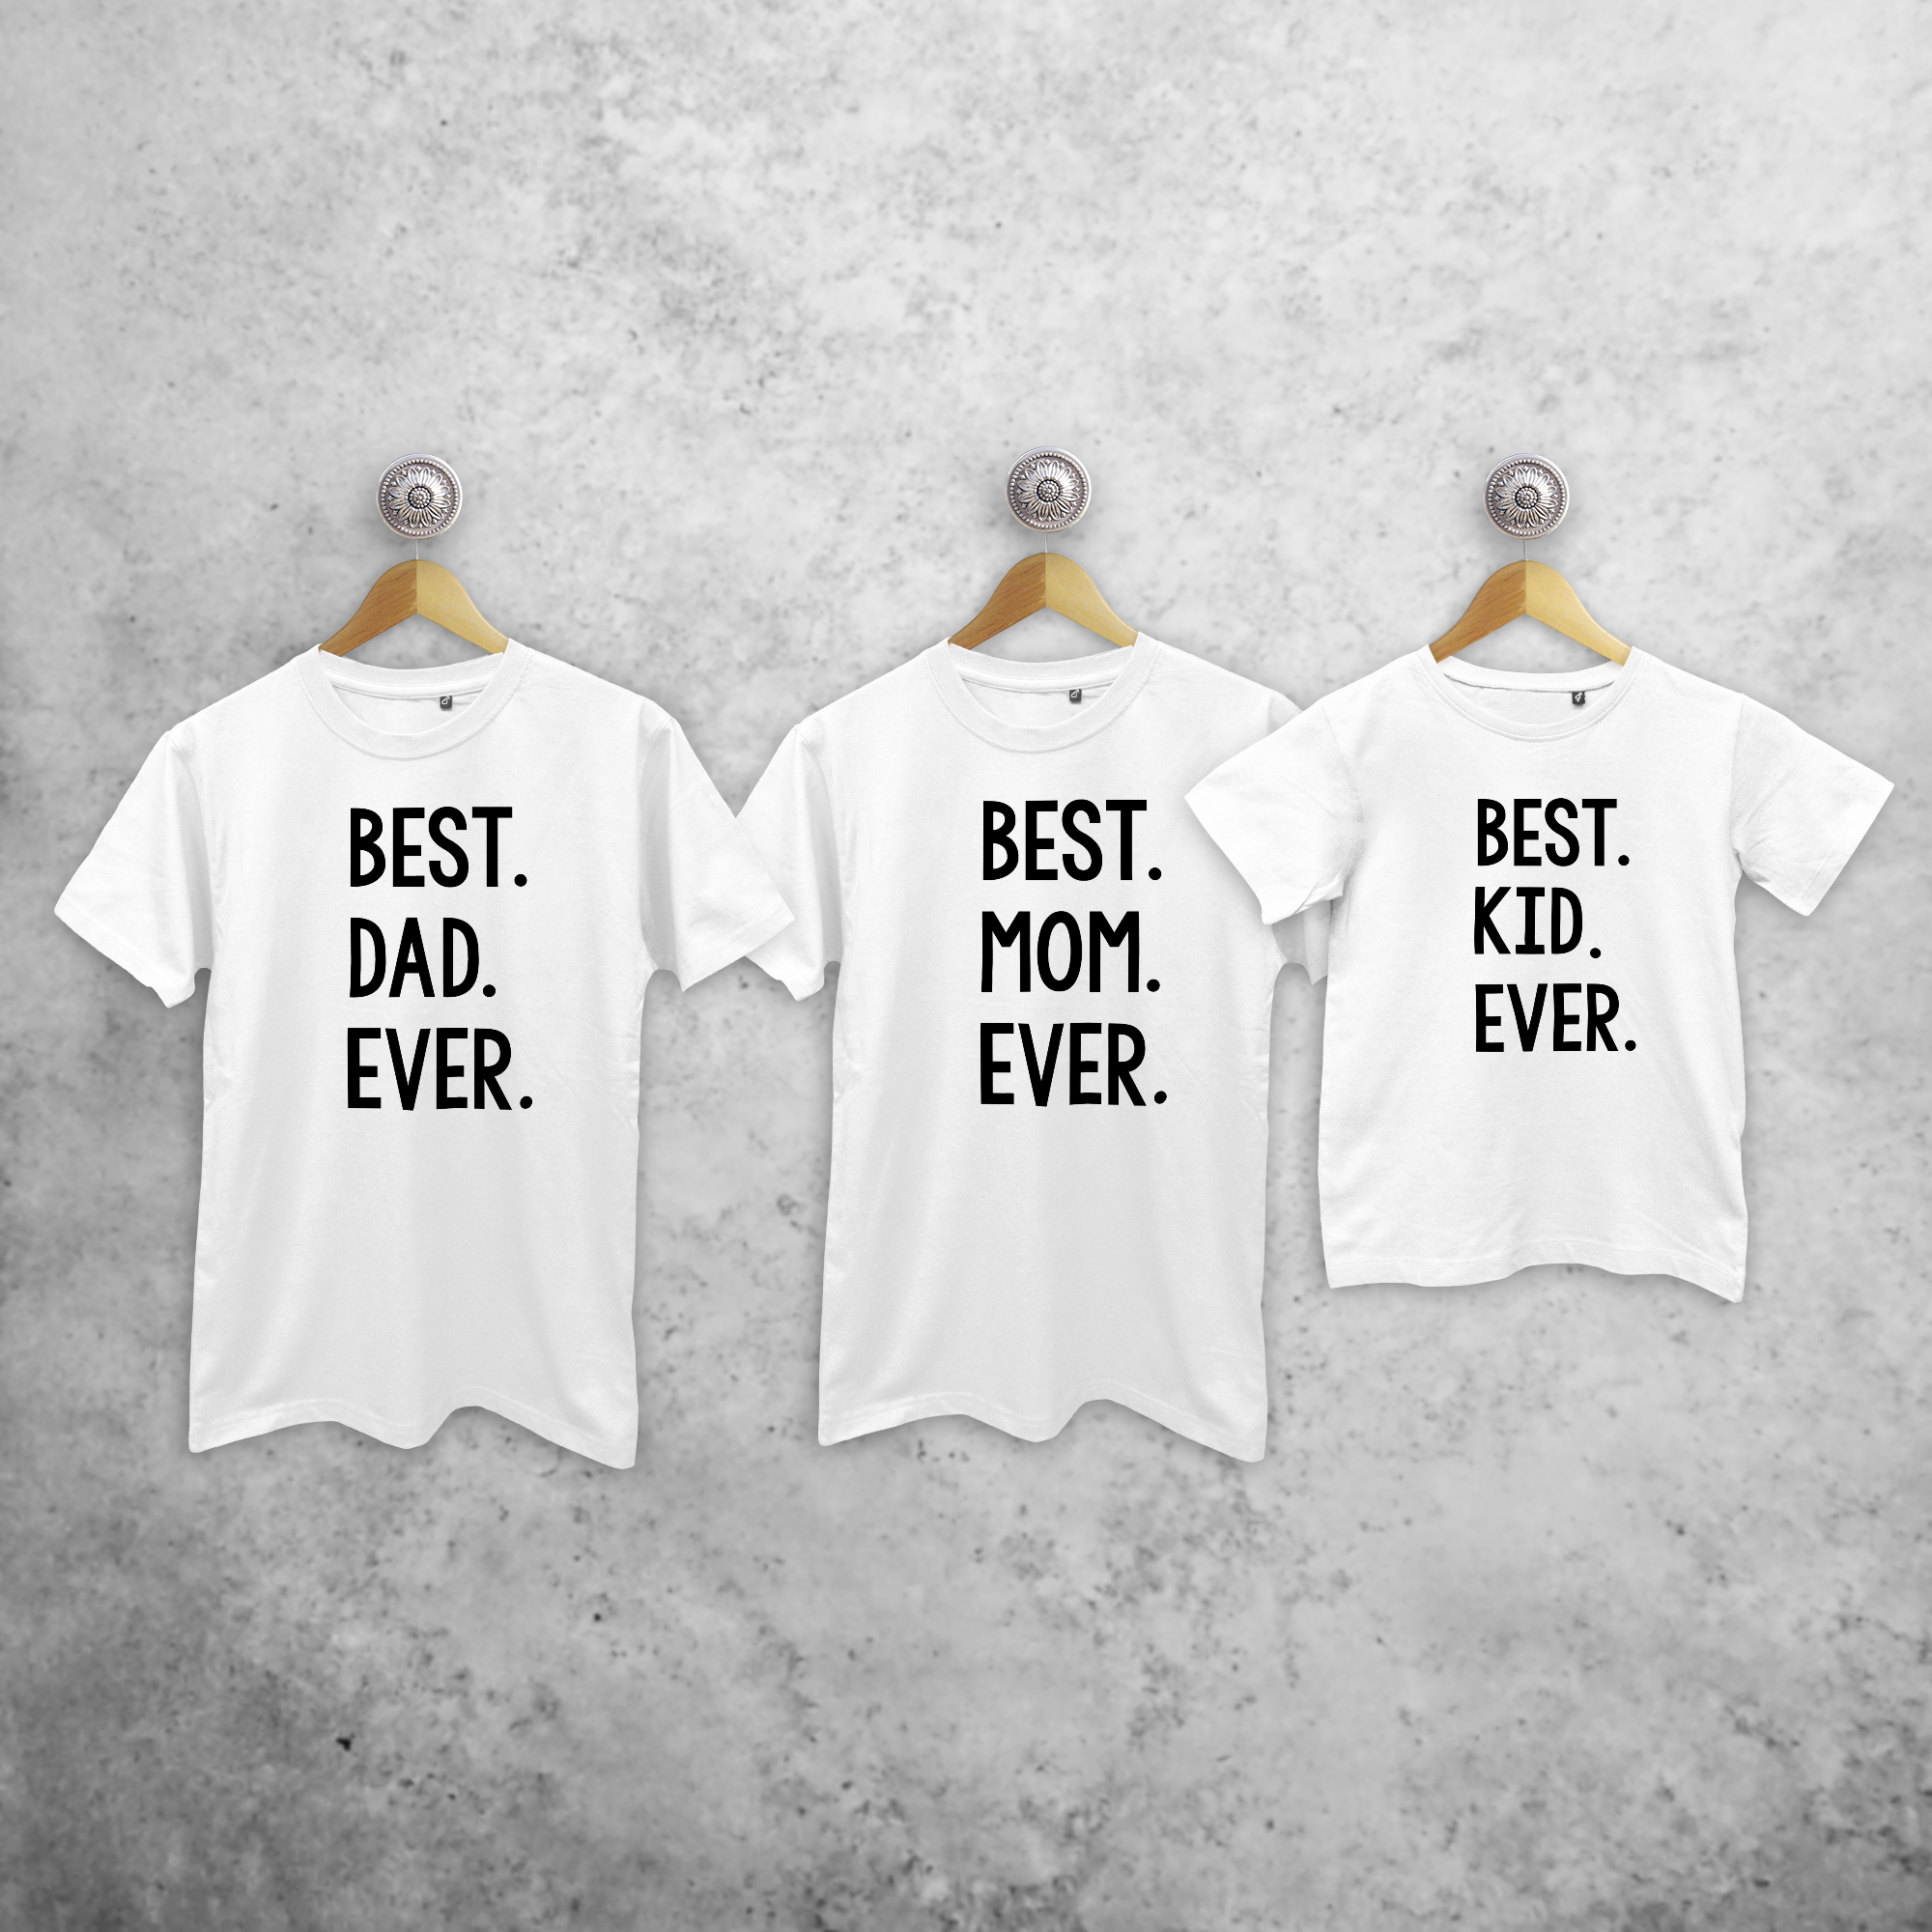 'Best. Dad. Ever.', 'Best. Mom. Ever.' & 'Best. Kid. Ever.' matchende shirts